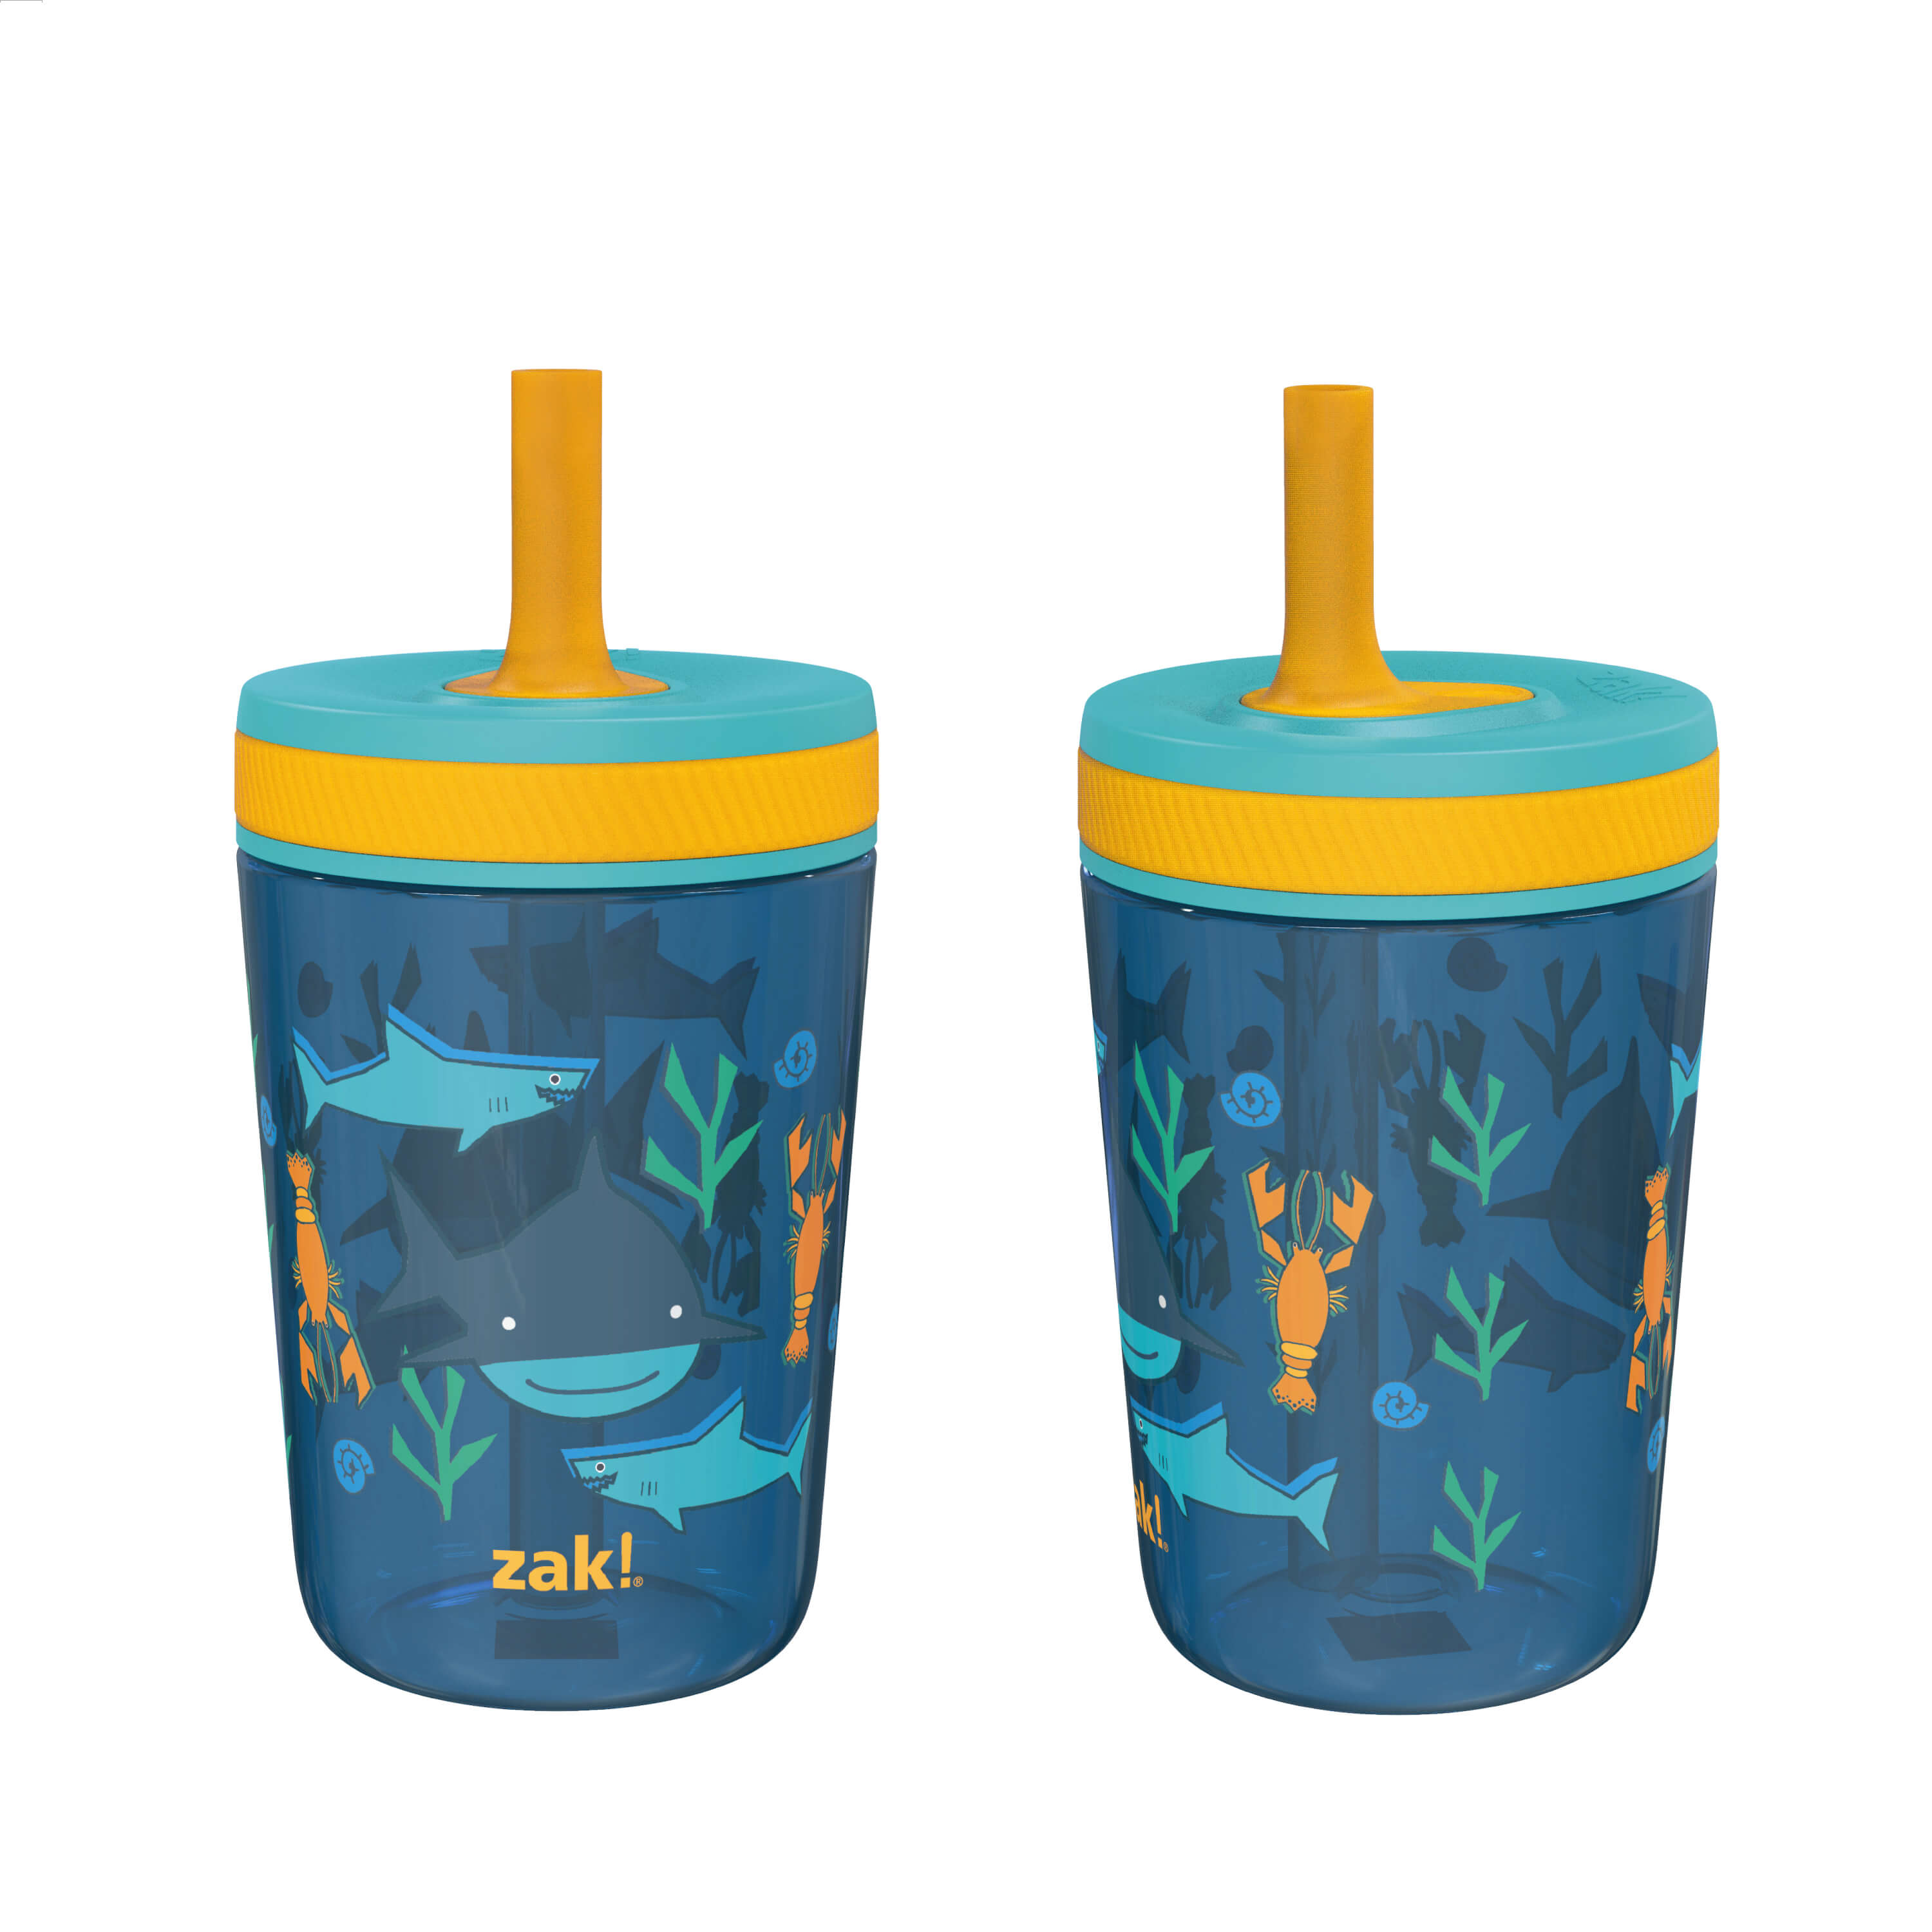 Zak Designs Minecraft Tumbler Kids Drinking Cup with Straw 15 Oz Green Blue